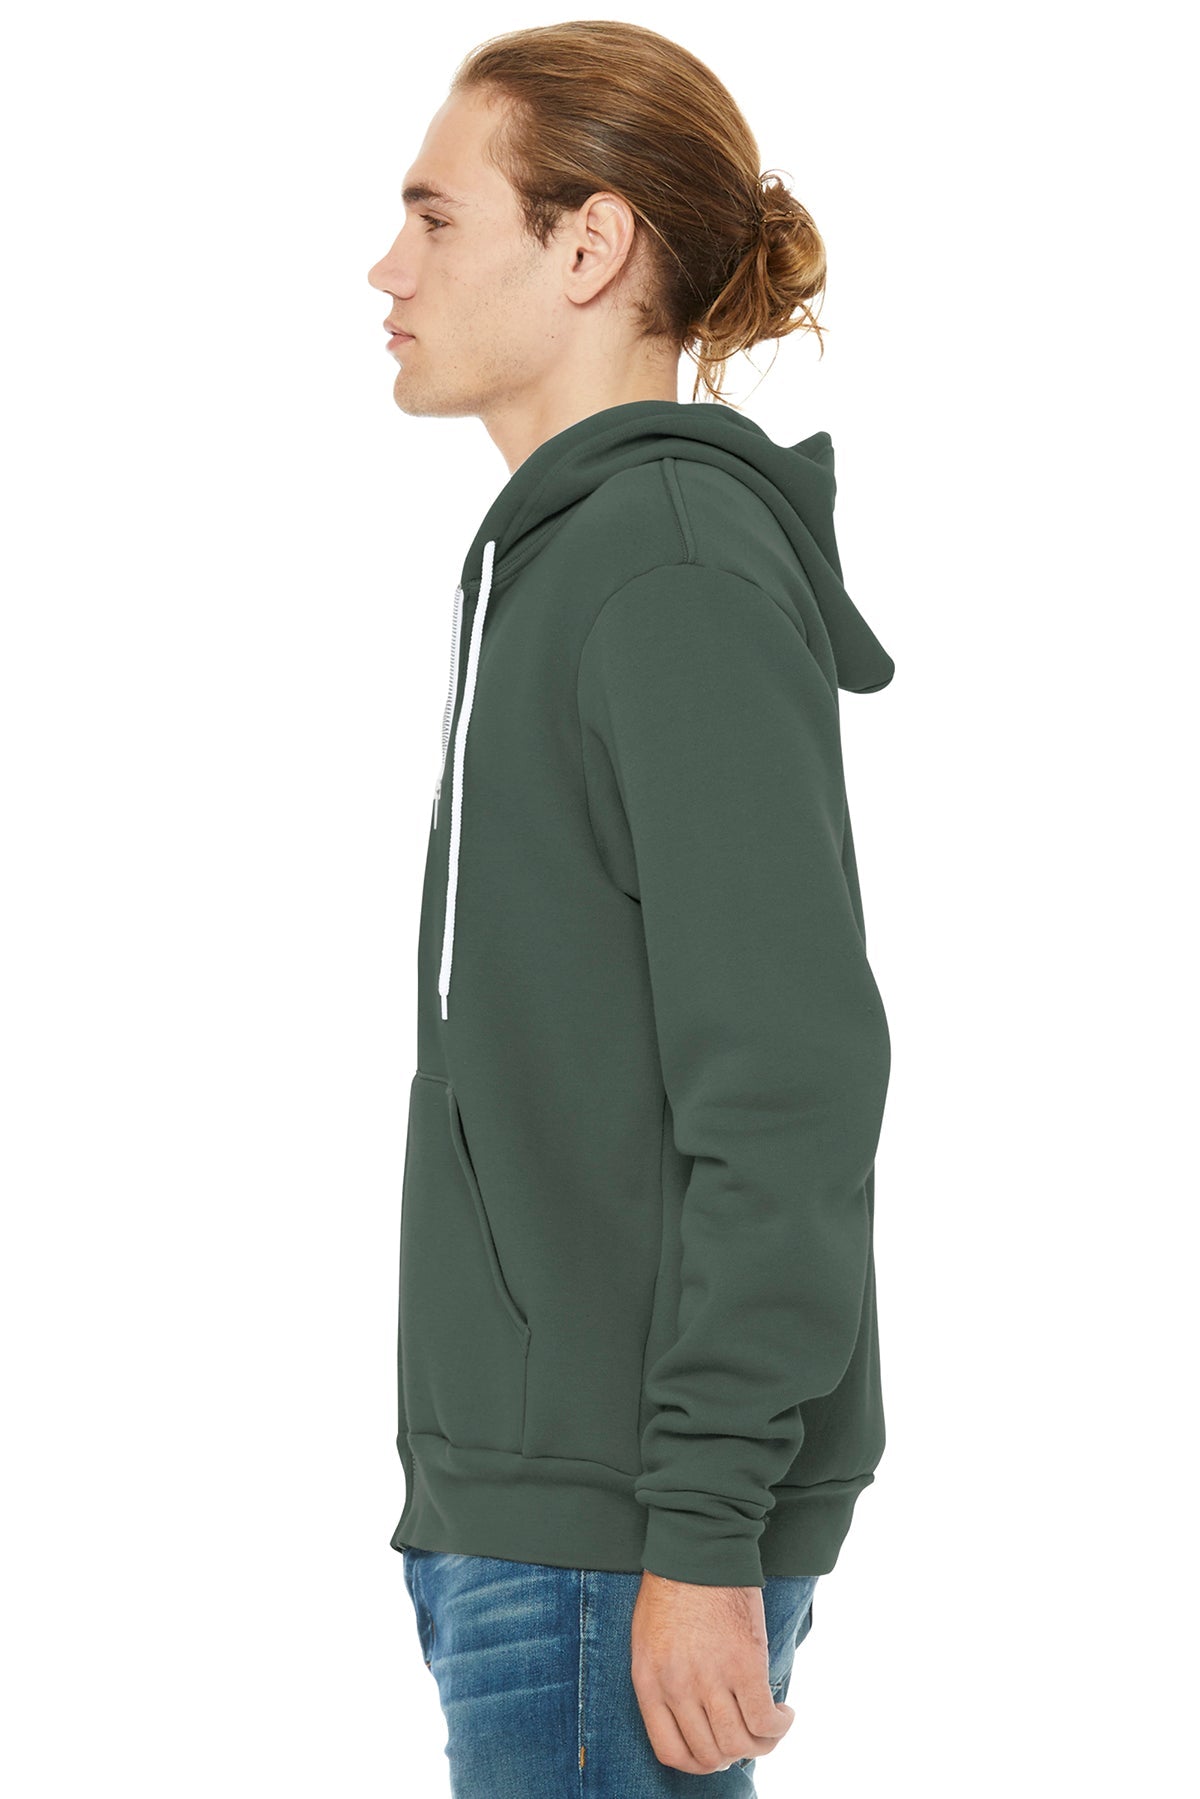 bella + canvas_3739_military green_company_logo_sweatshirts